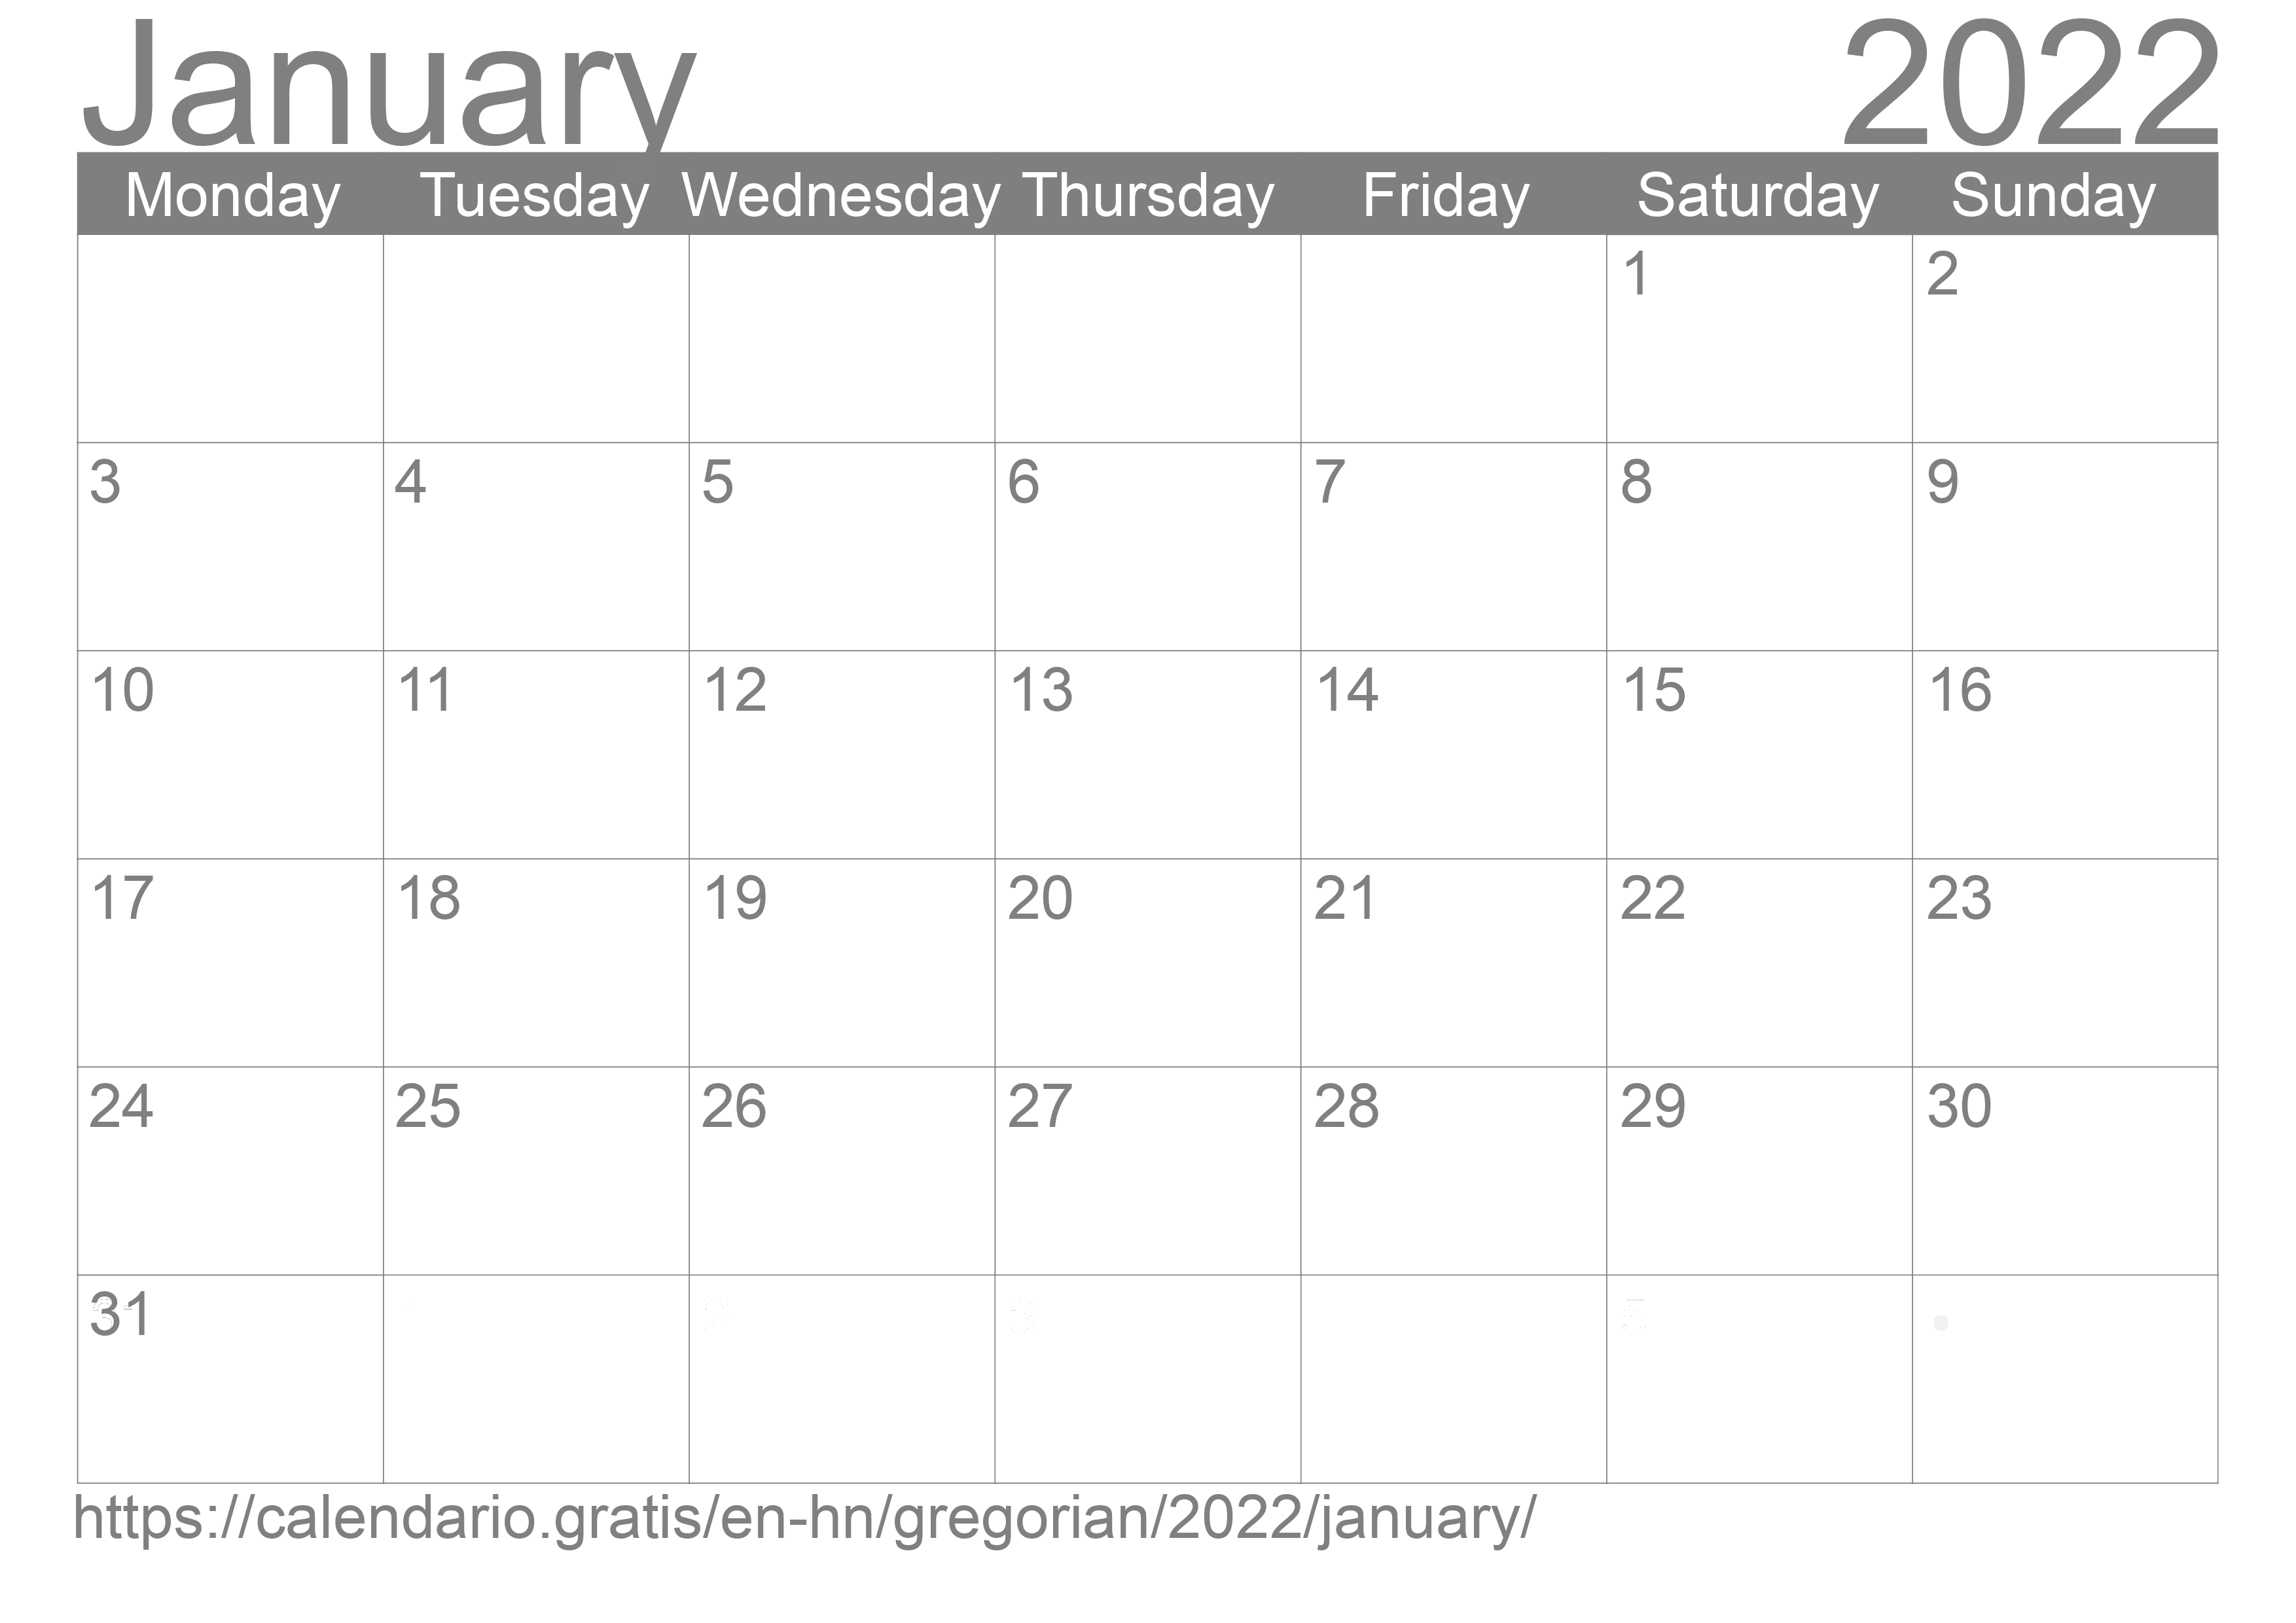 Calendar January 2022 to print